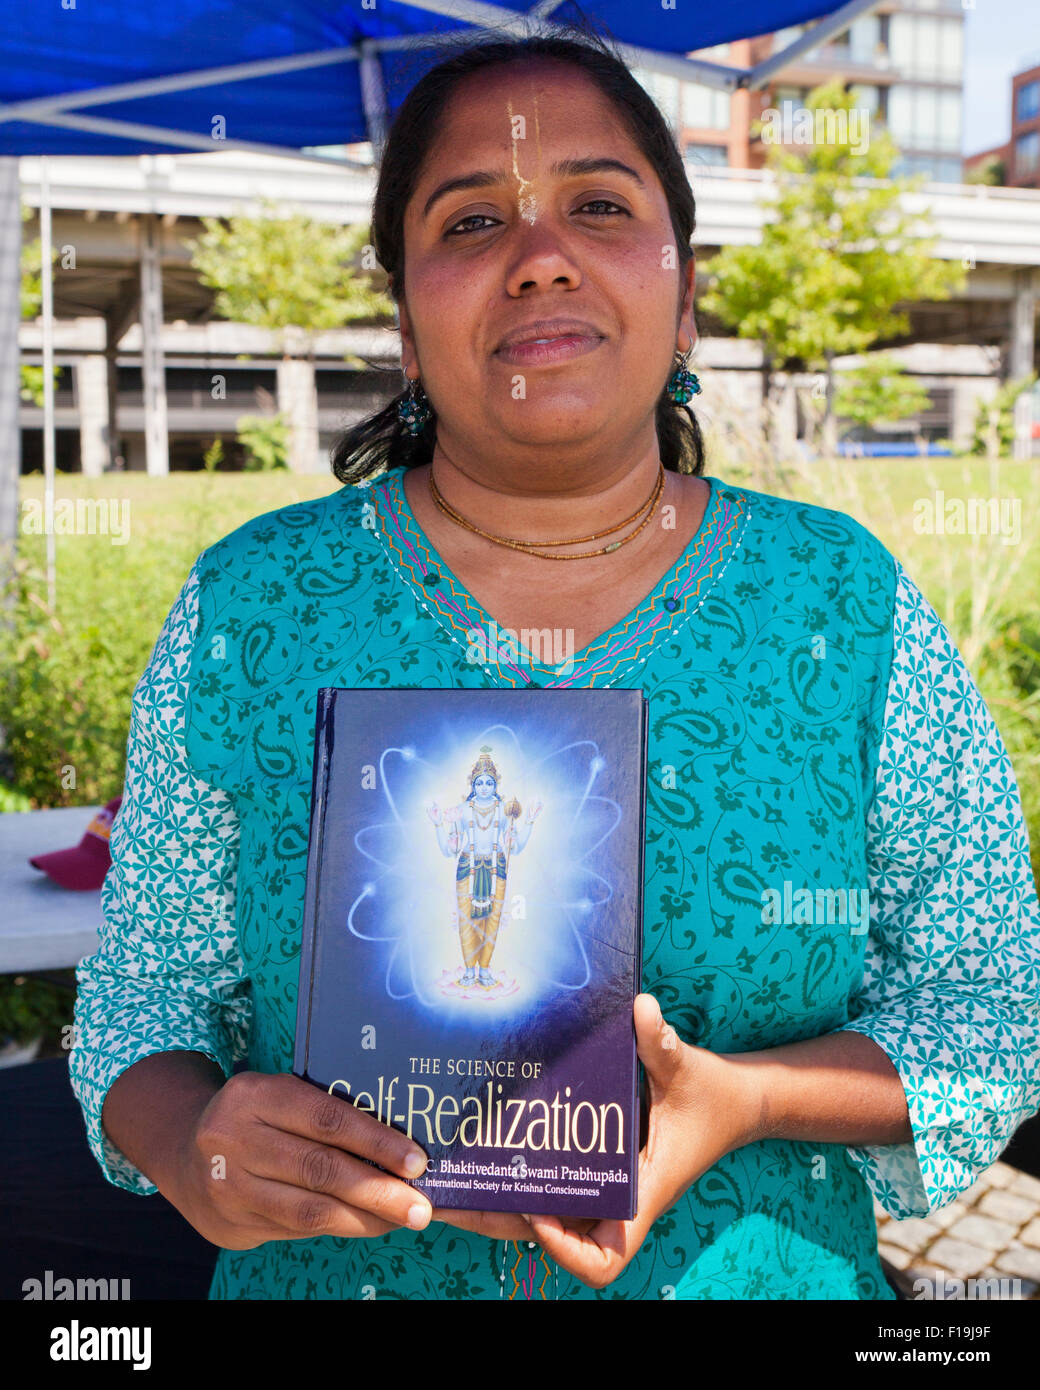 Hare Krishna woman holding Self-Realization book - USA Stock Photo